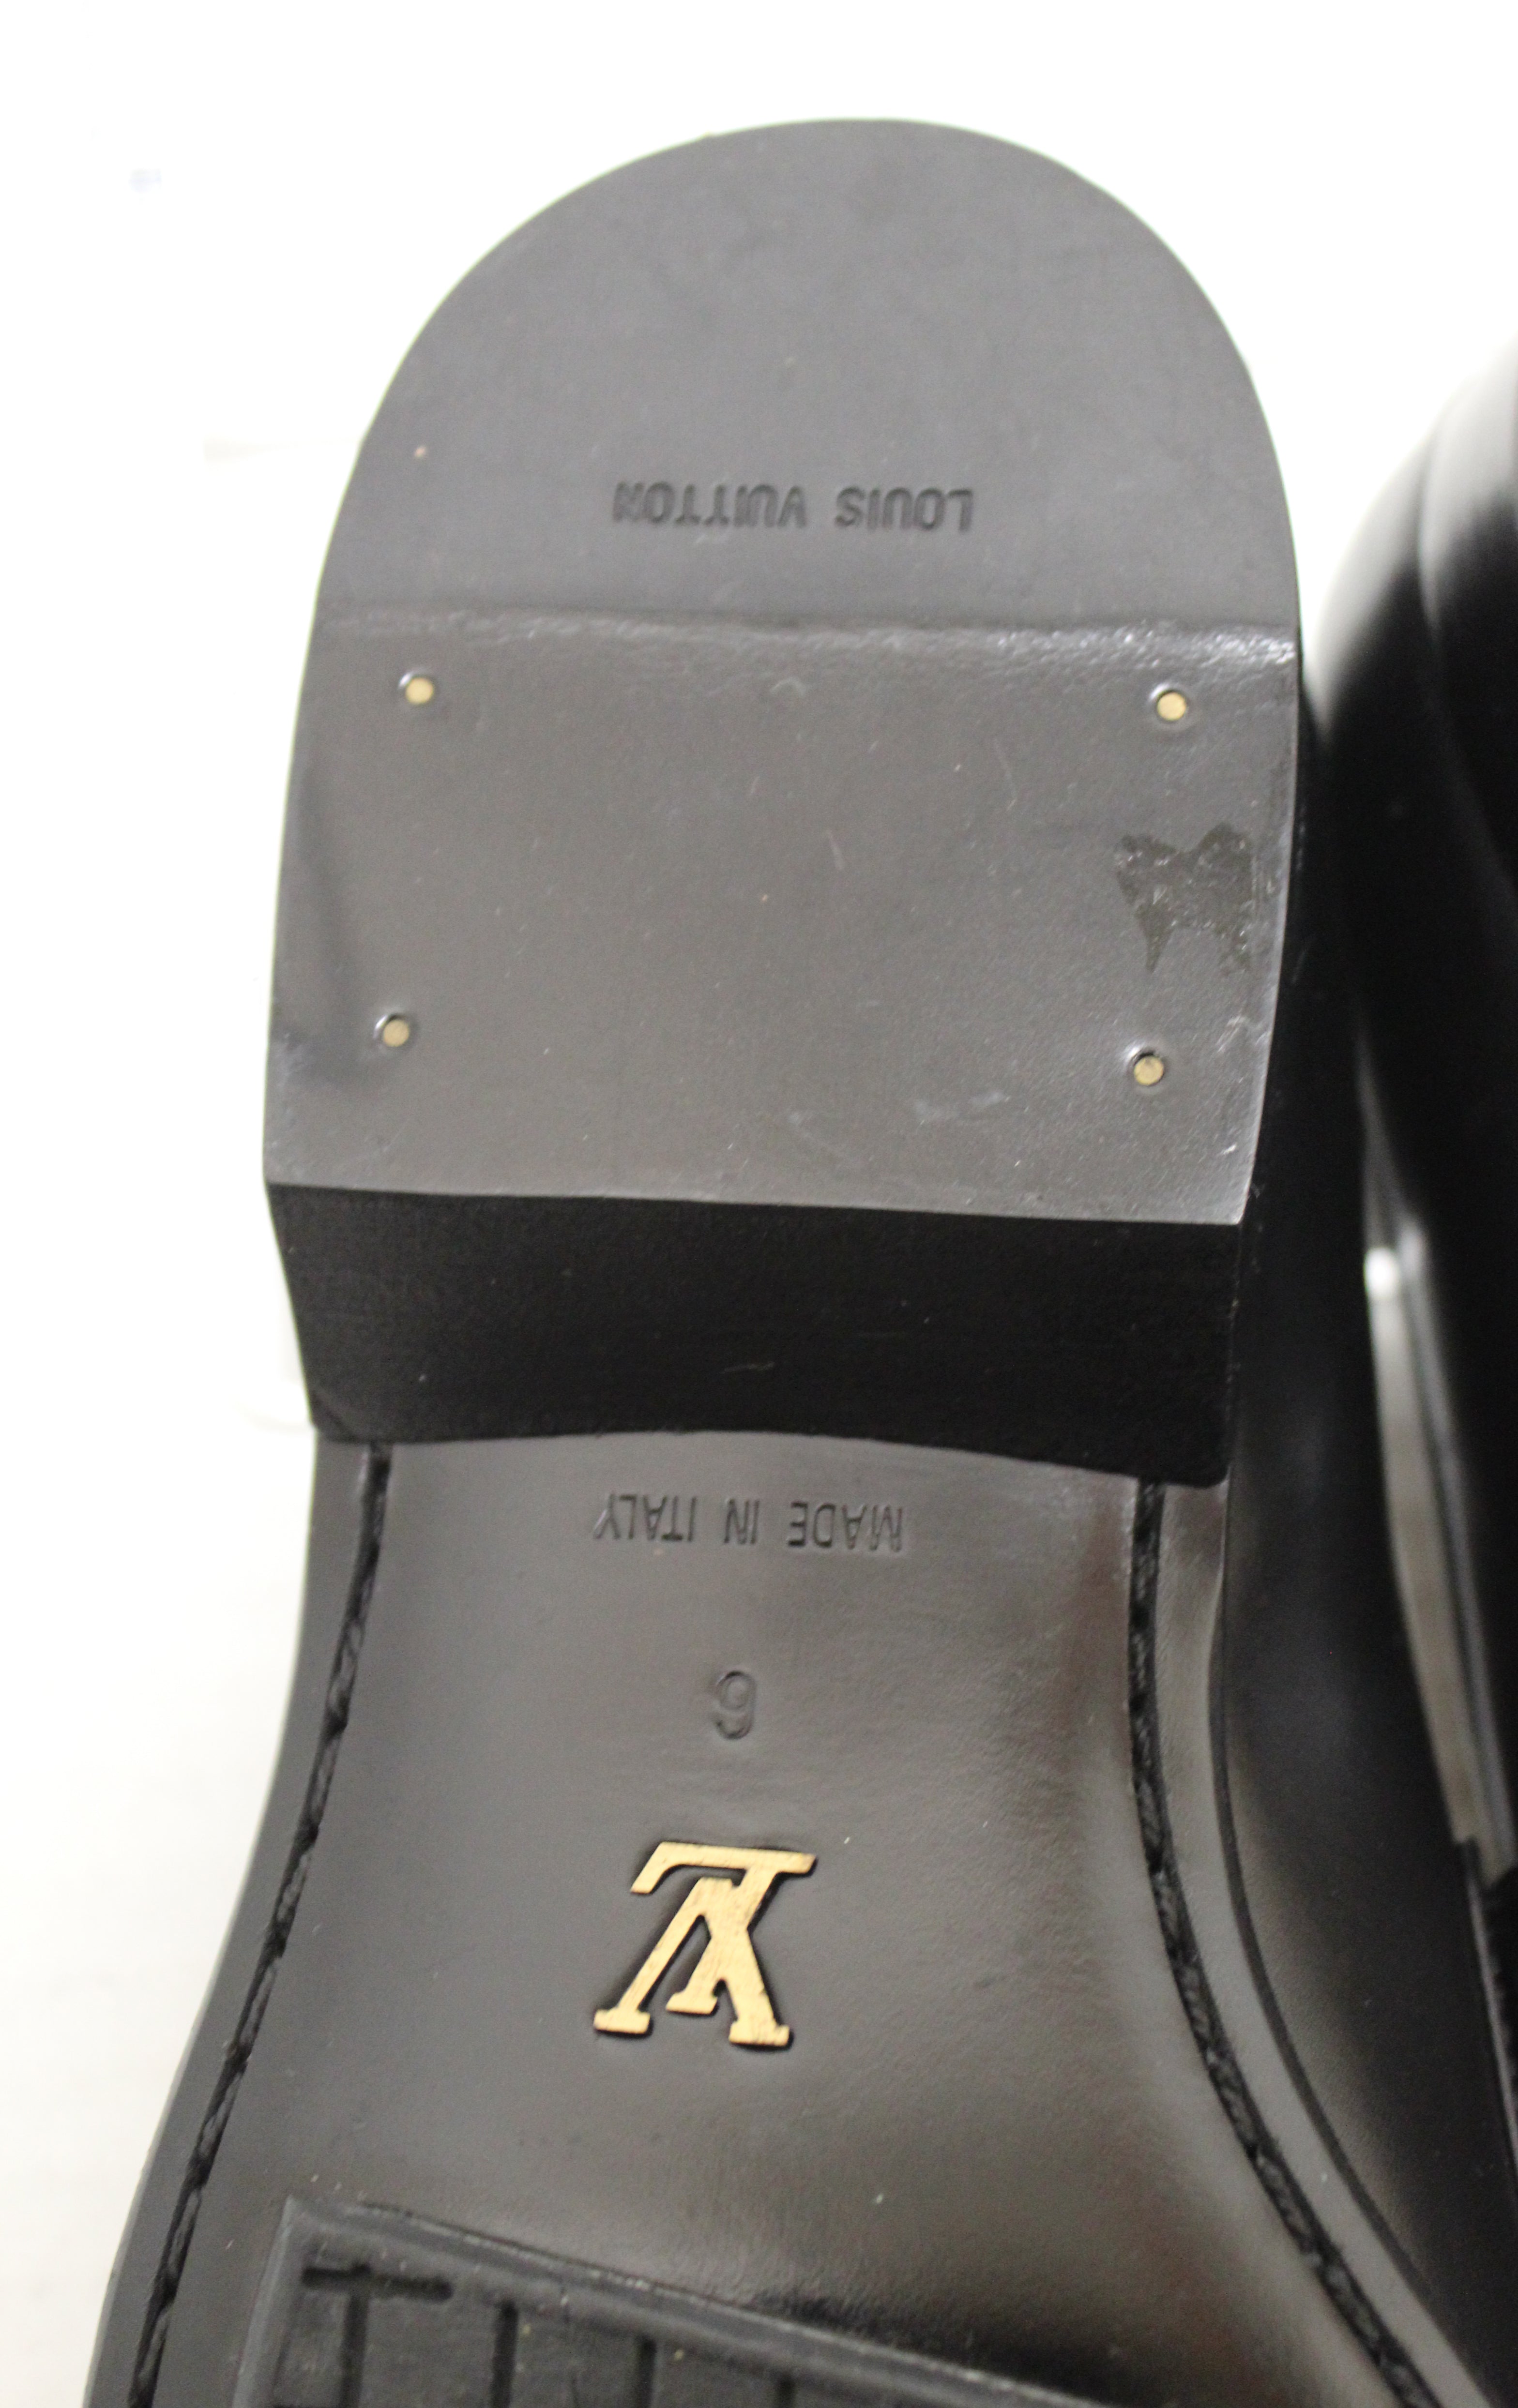 Authentic Louis Vuitton Men's Black Calf Leather Buckle Loafers Dress Shoes UK size 6 (US size 7)